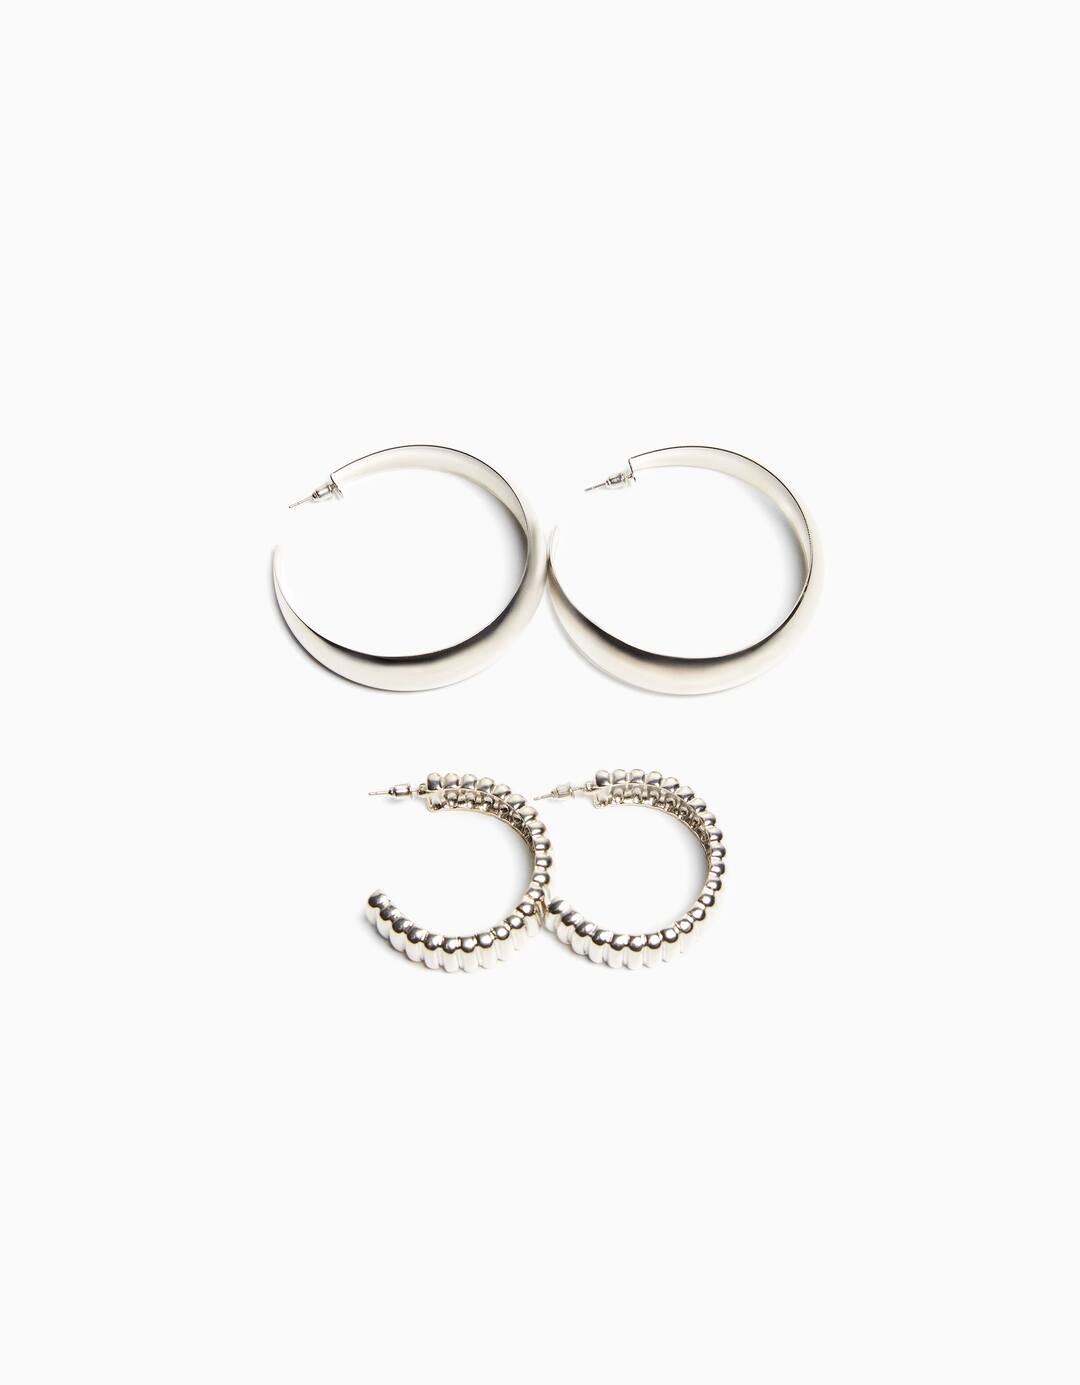 Set of 2 pairs of textured thick hoop earrings